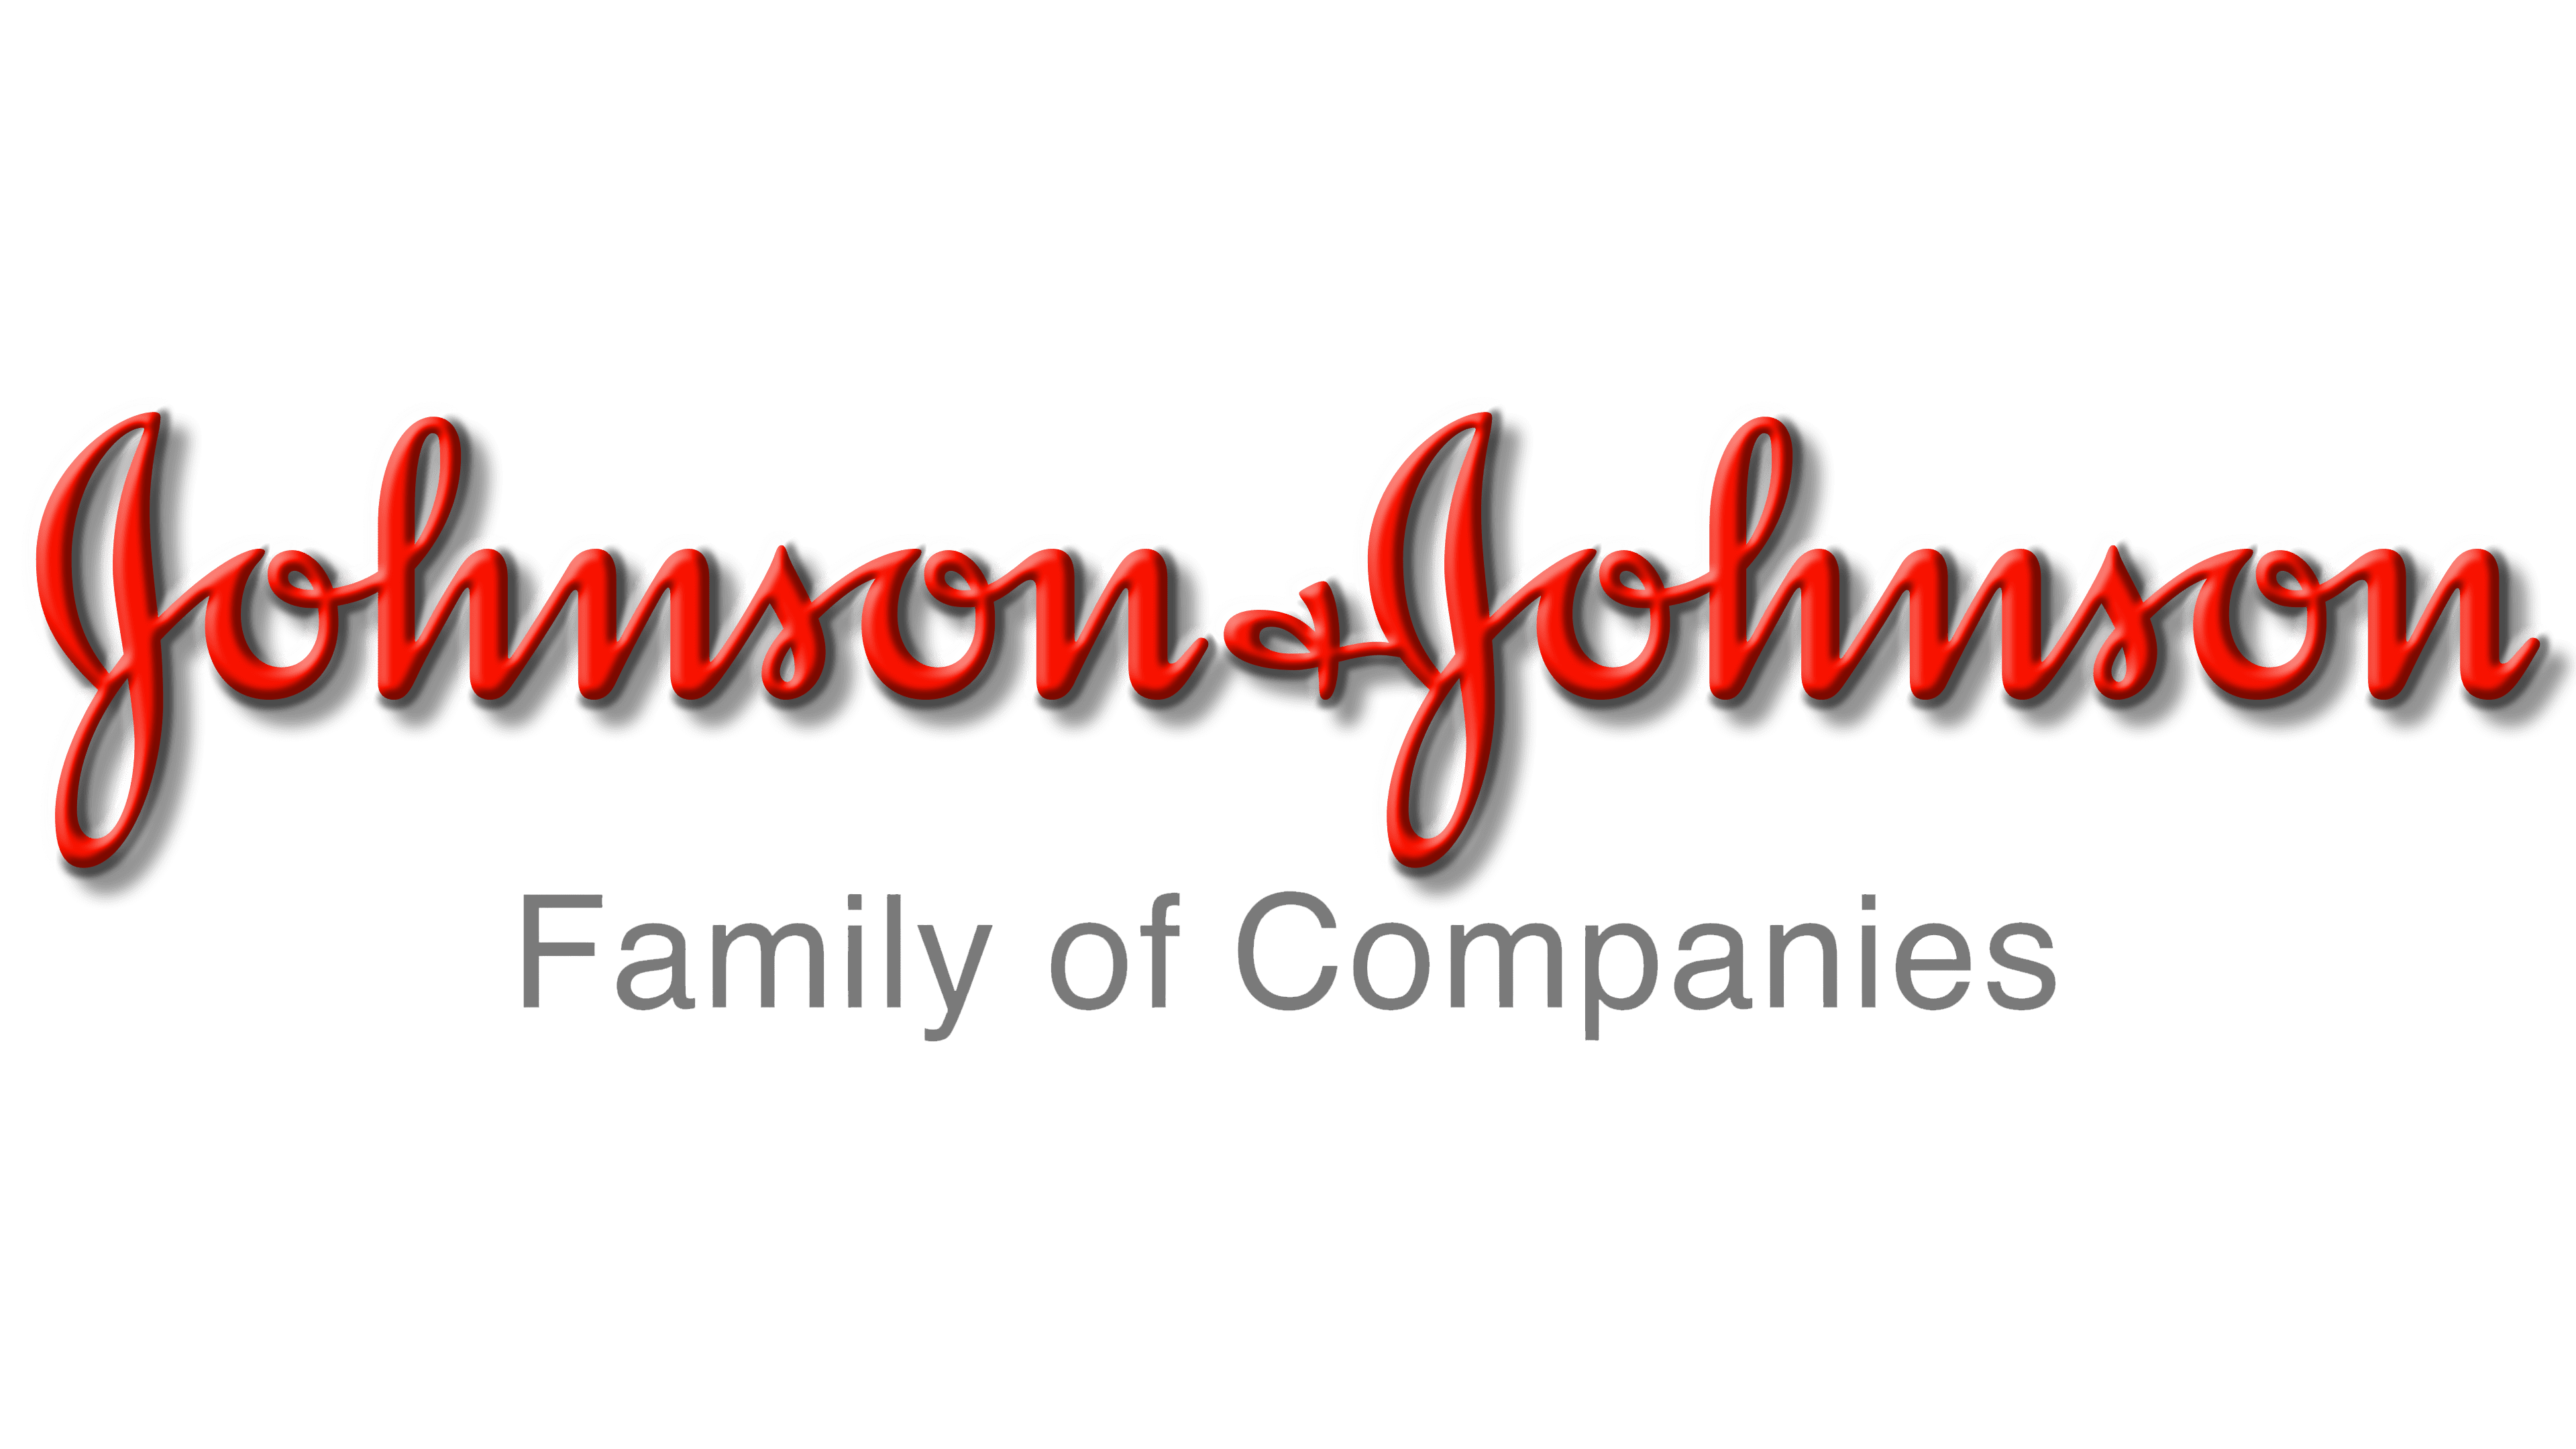 johnson-johnson-logo-valor-hist-ria-png